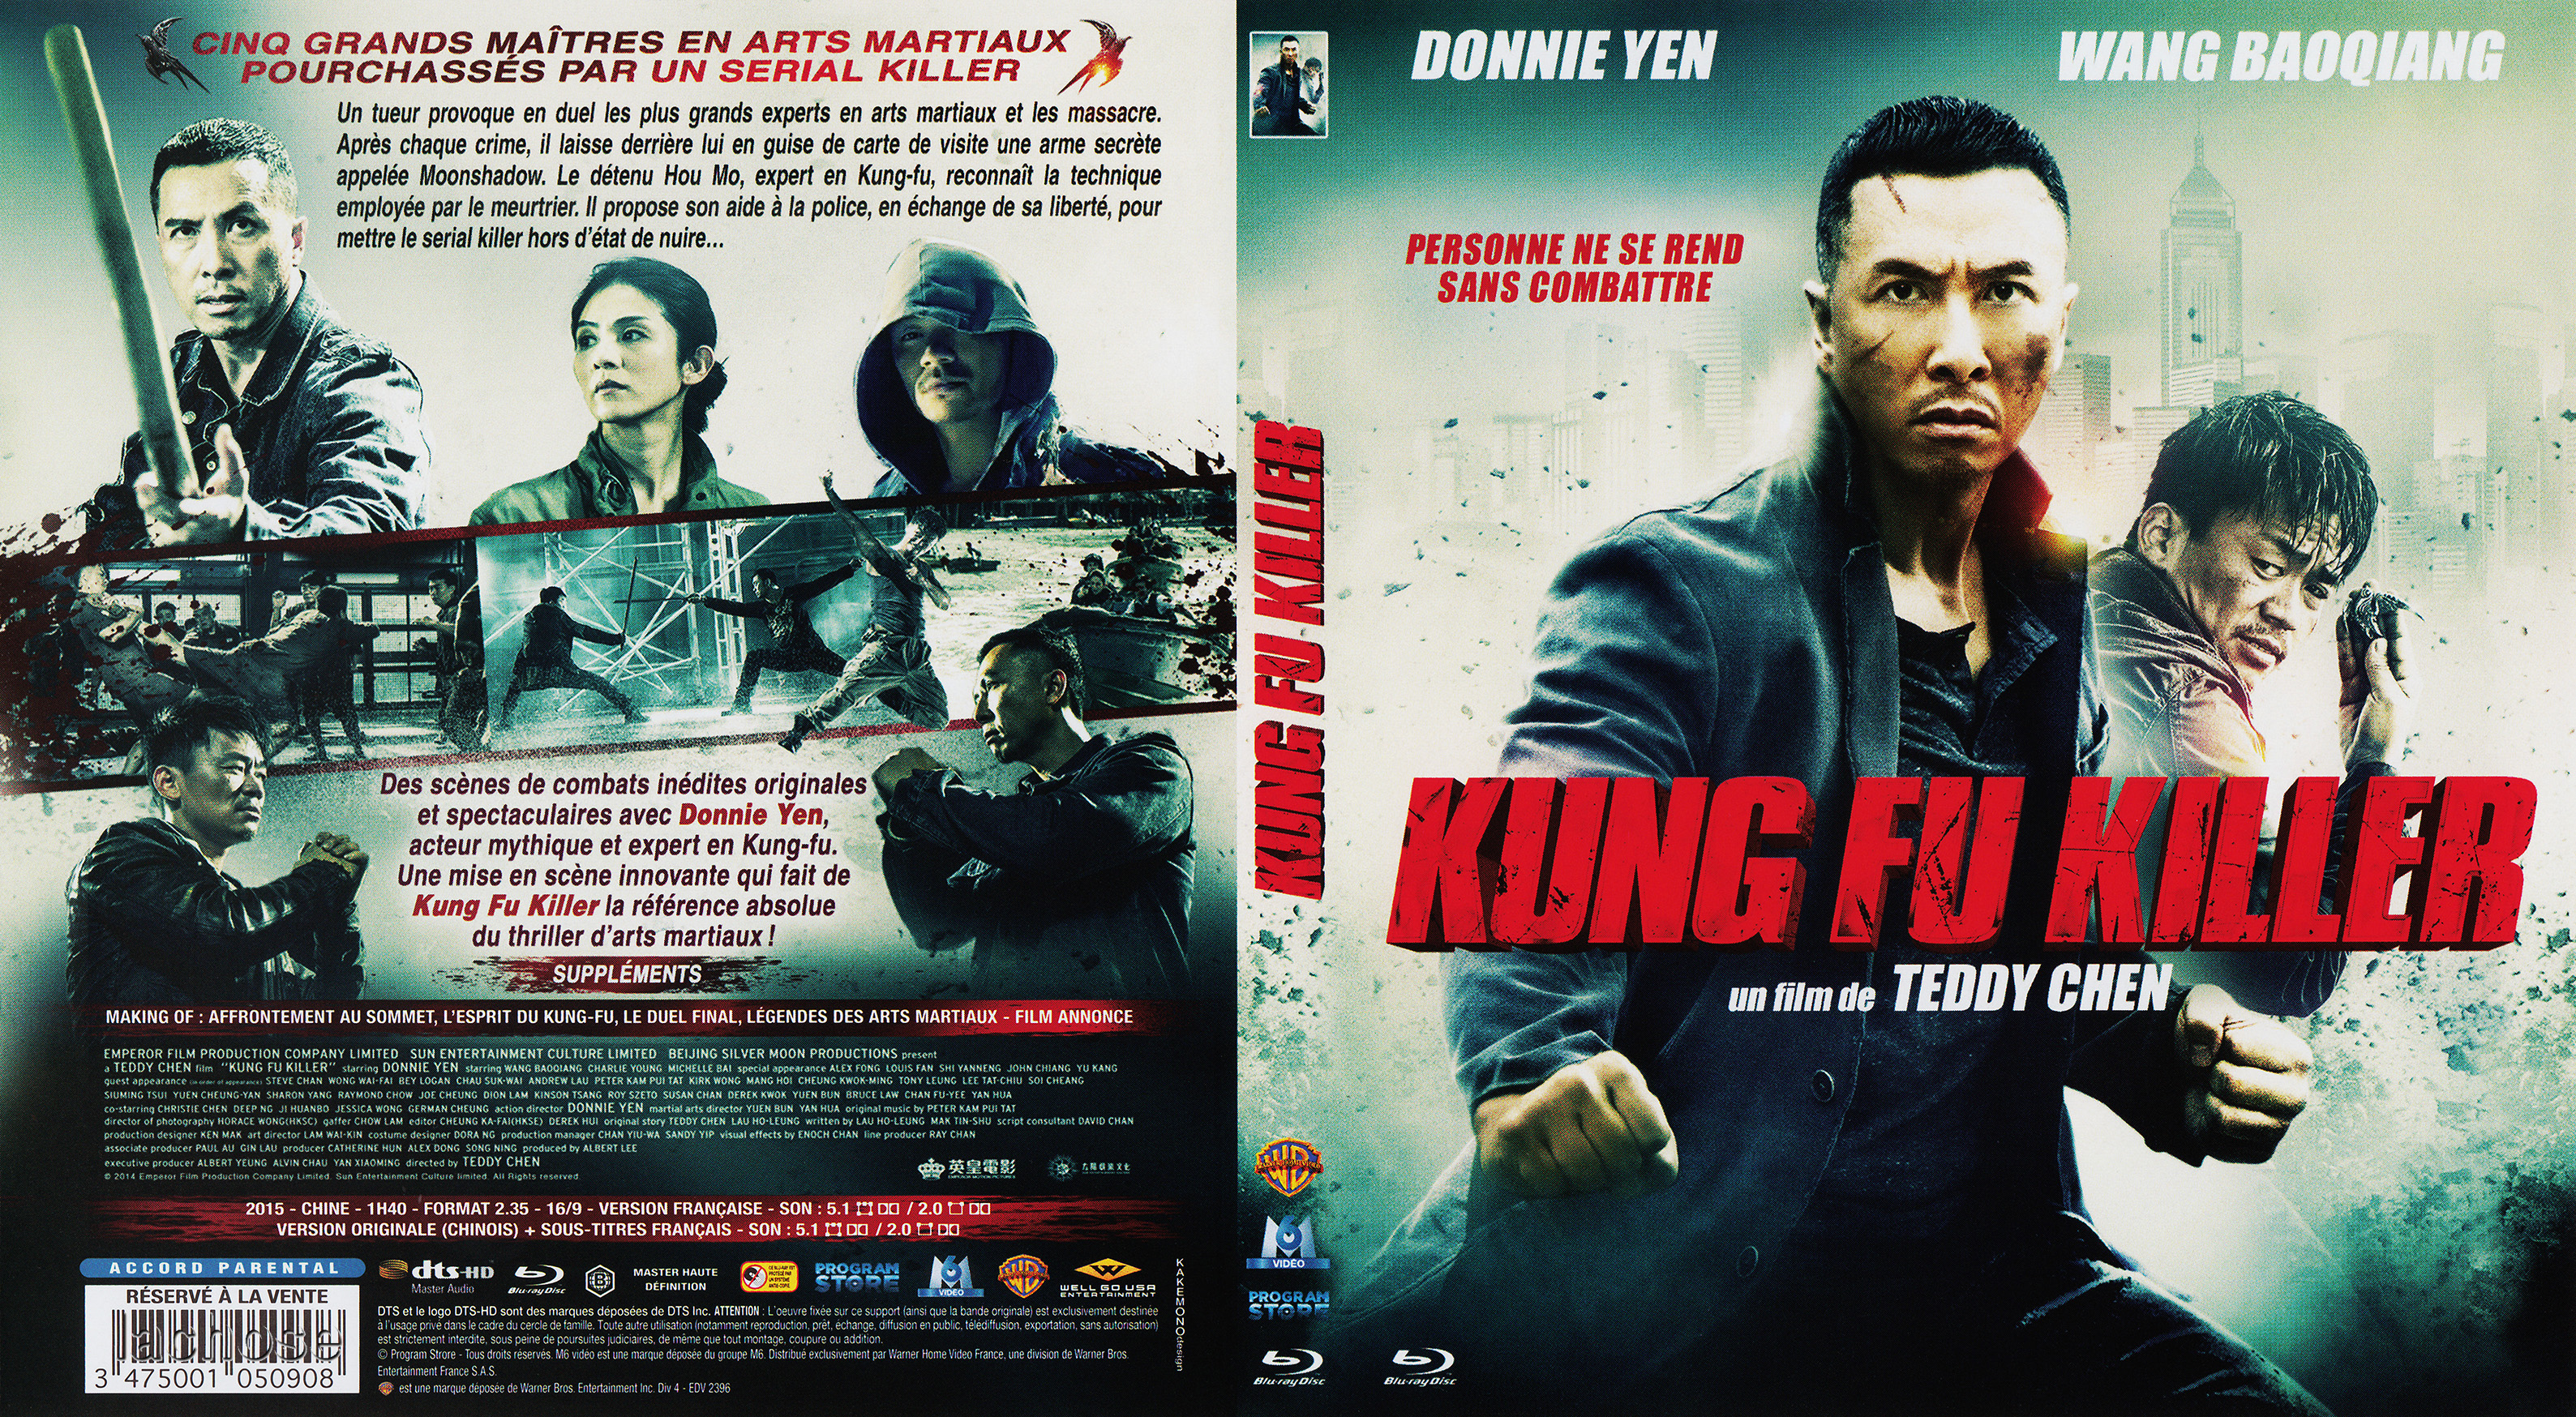 Jaquette DVD Kung fu killer (BLU-RAY)